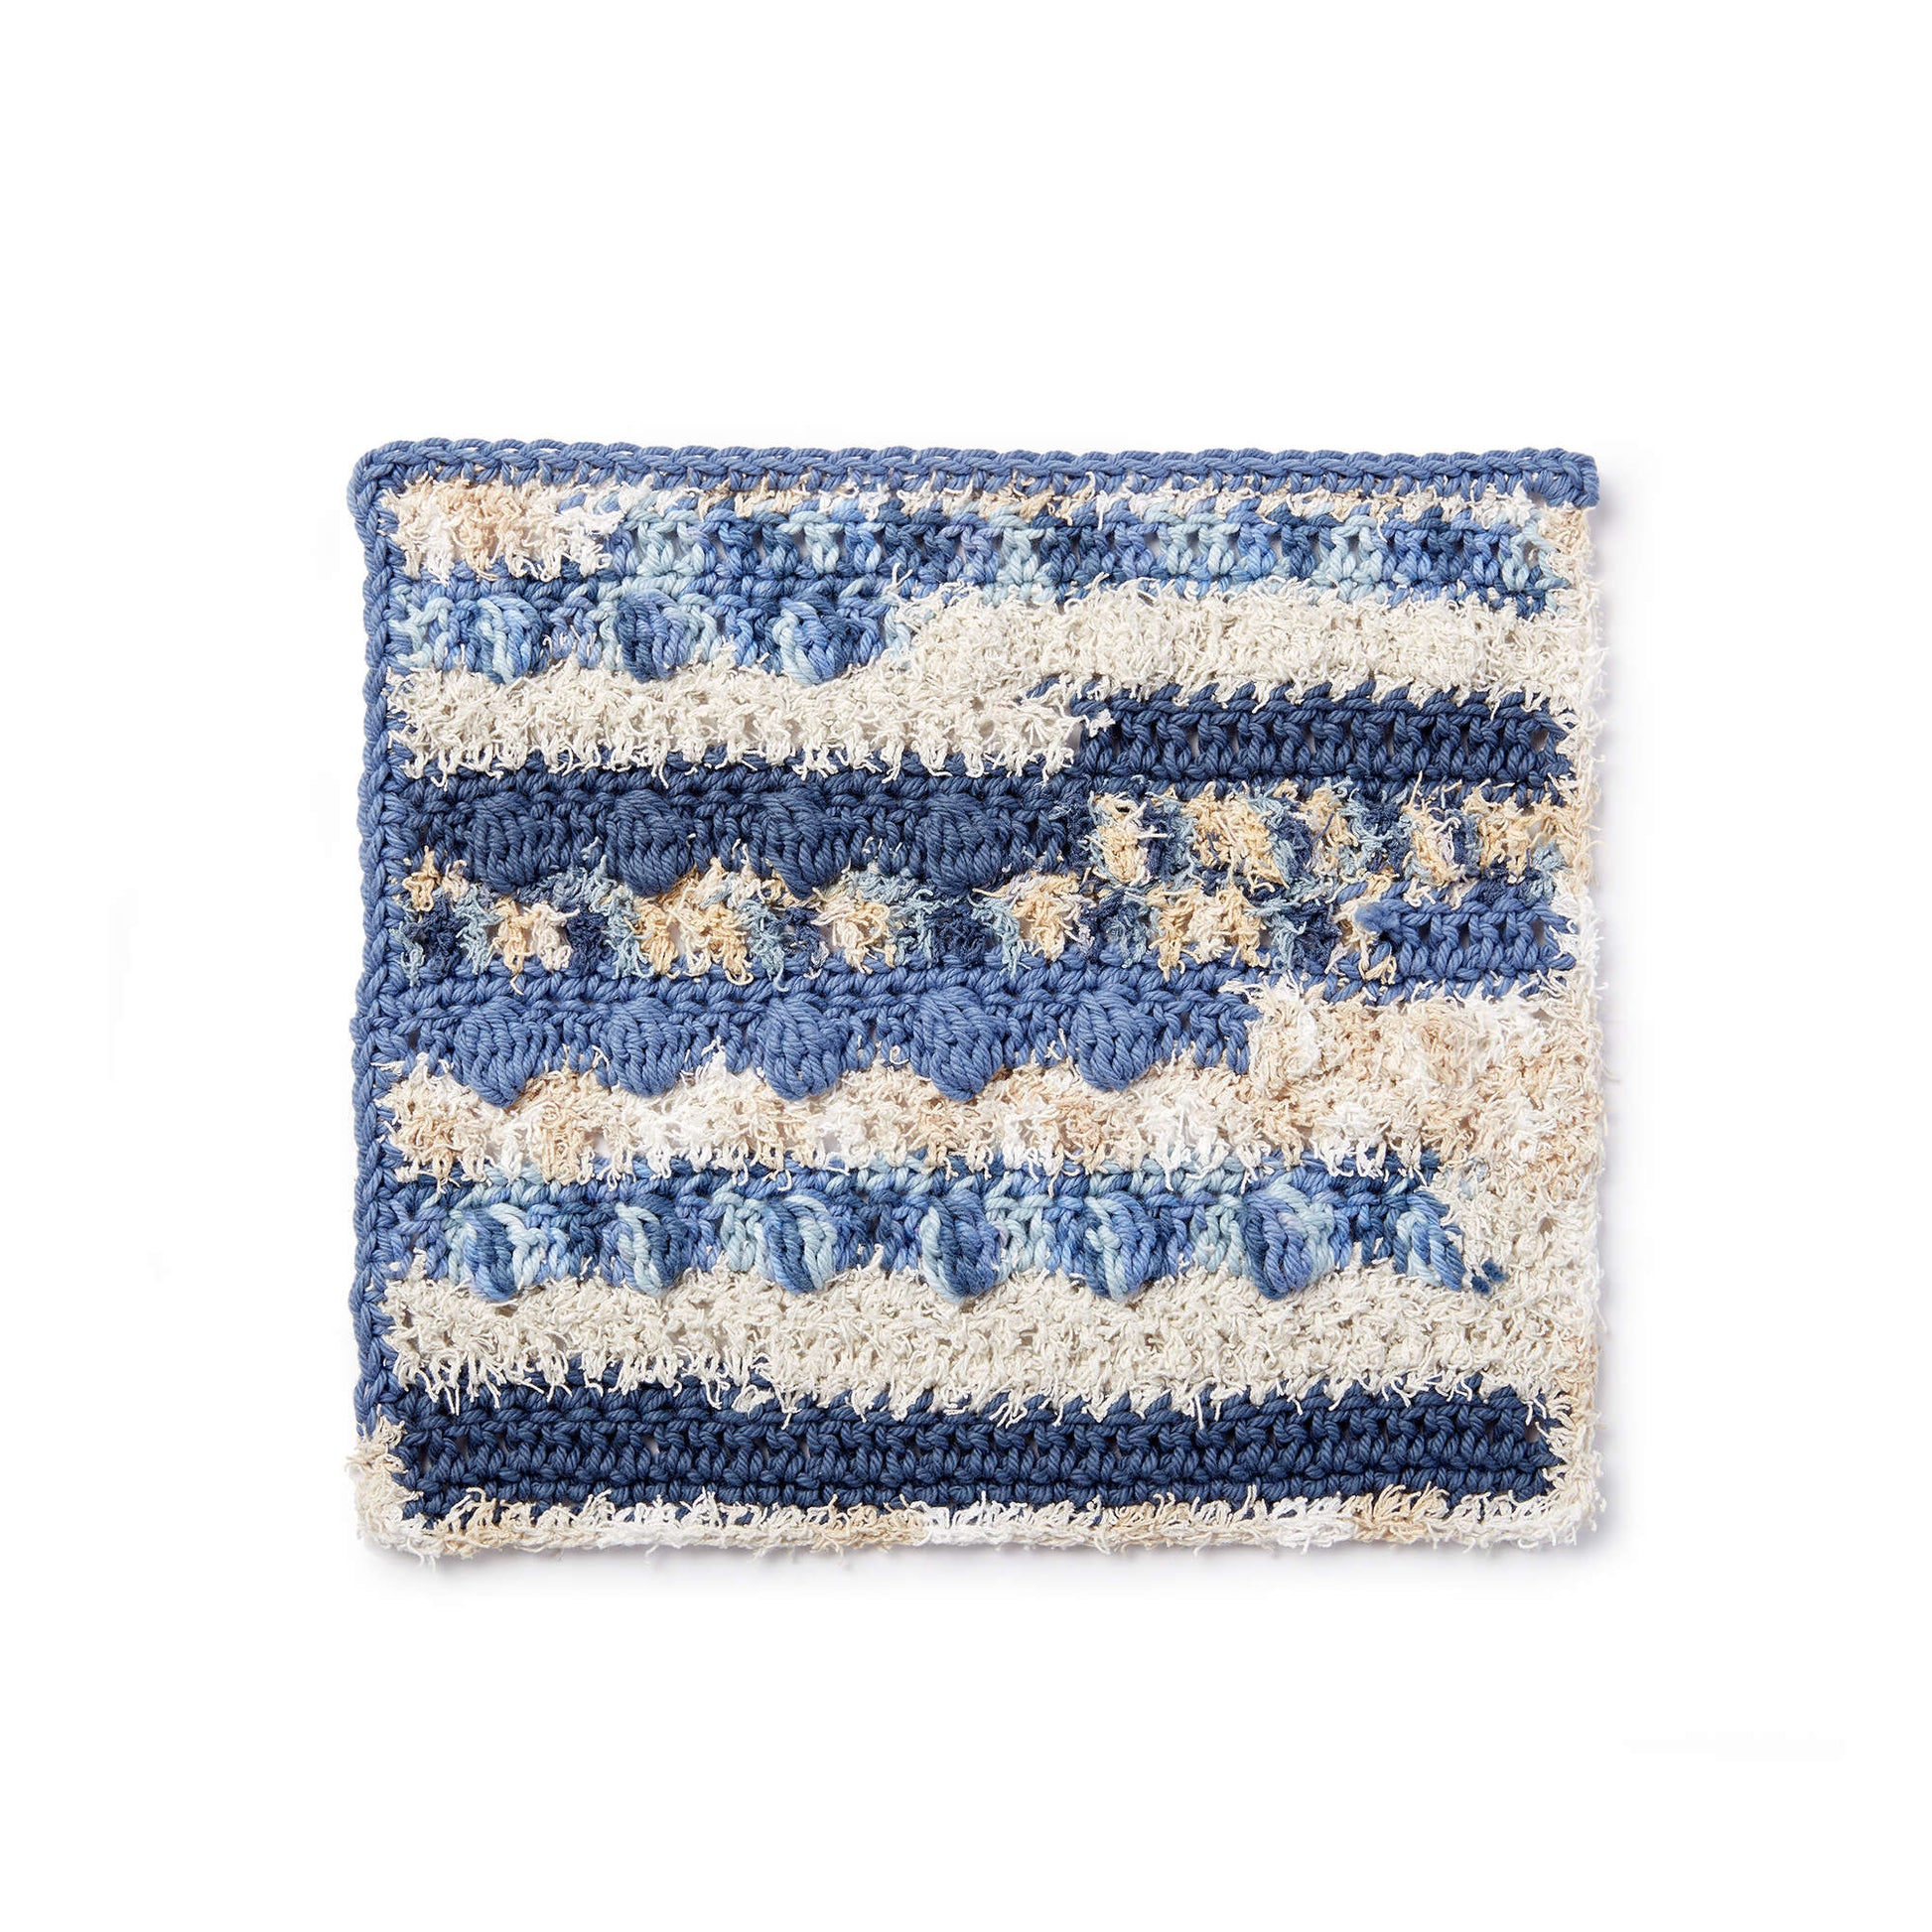 Lily Sugar'n Cream Scrubbing Bobbles Crochet Dishcloth Single Size